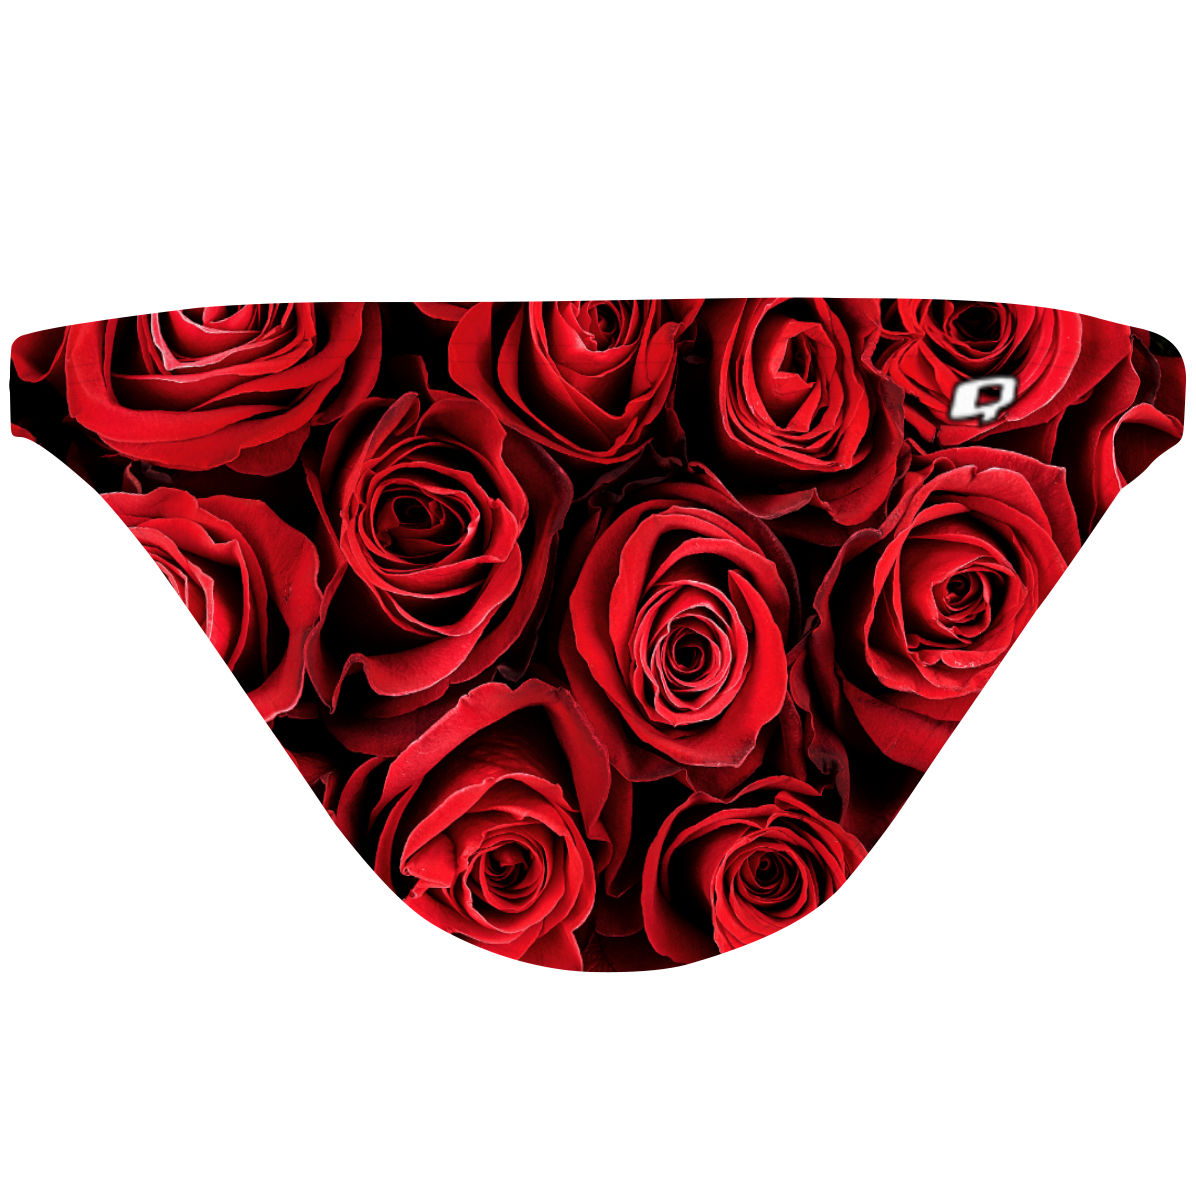 Red Roses - Tieback Bikini Bottom